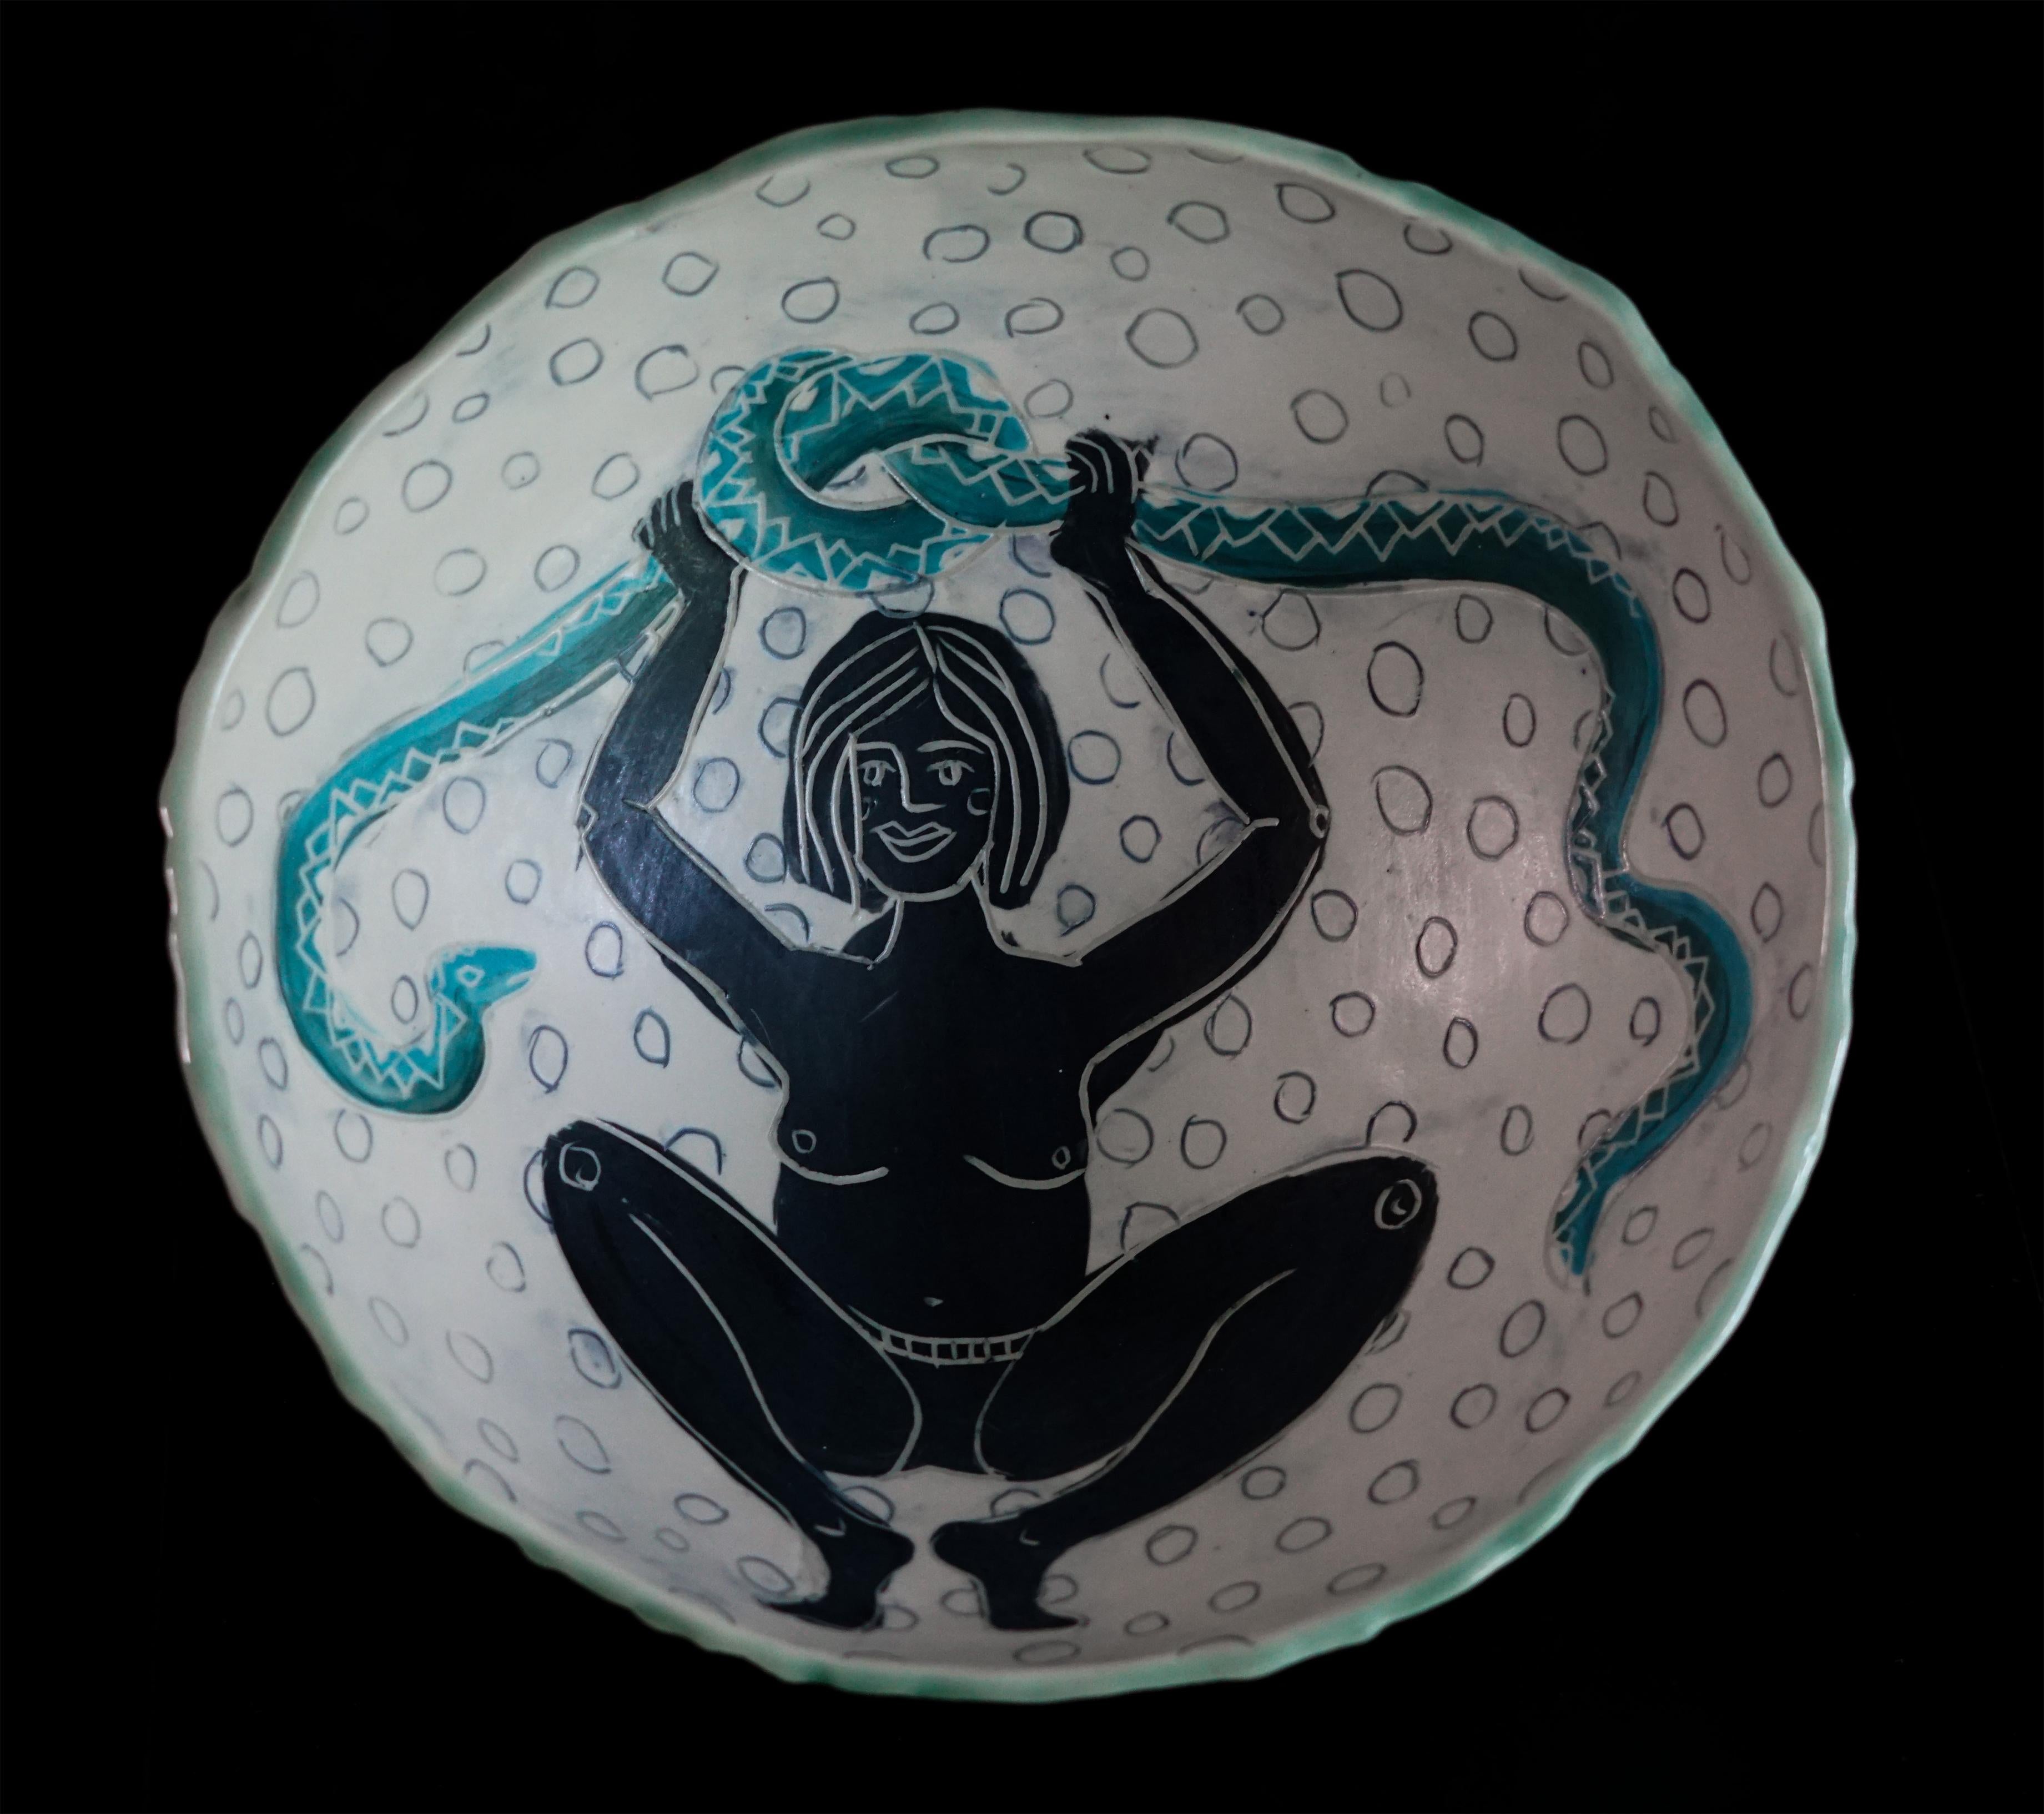 Alex Hodge Nude Sculpture – Eve in Prapadasana, handgefertigte Porzellanschale